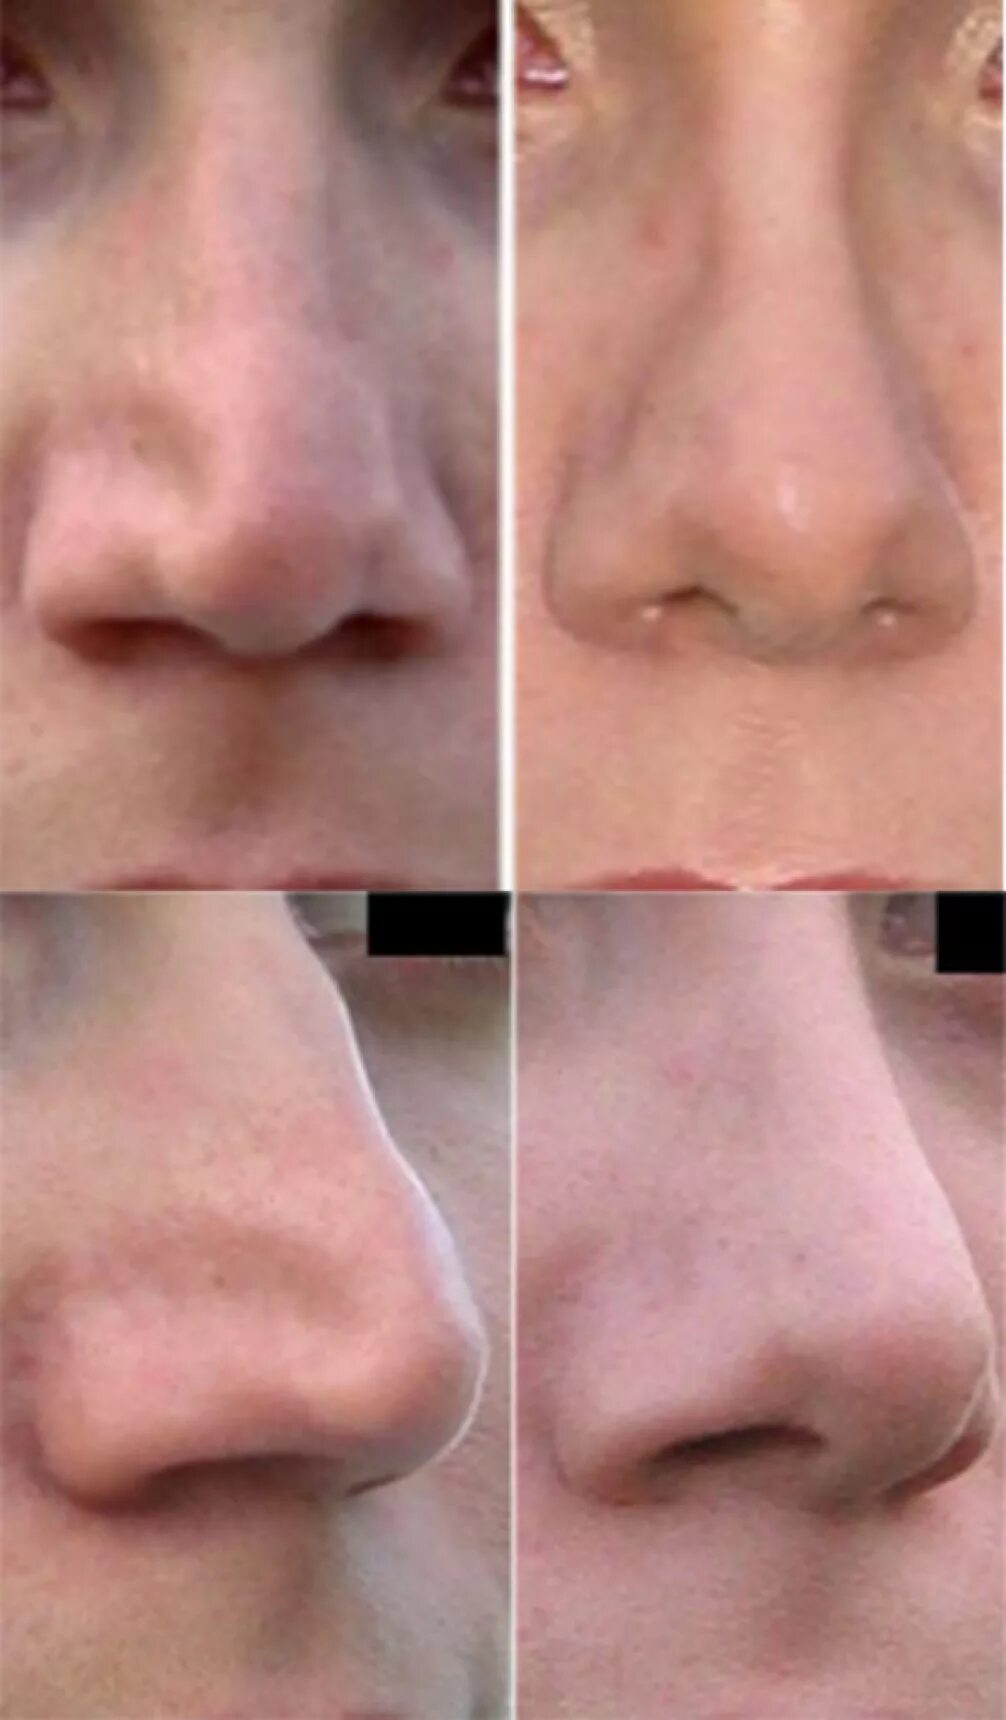 Дипроспан ринопластика. Ринопластика сужение носа. Пластика носа дипроспаном. Уколы дипроспана в нос до и после.